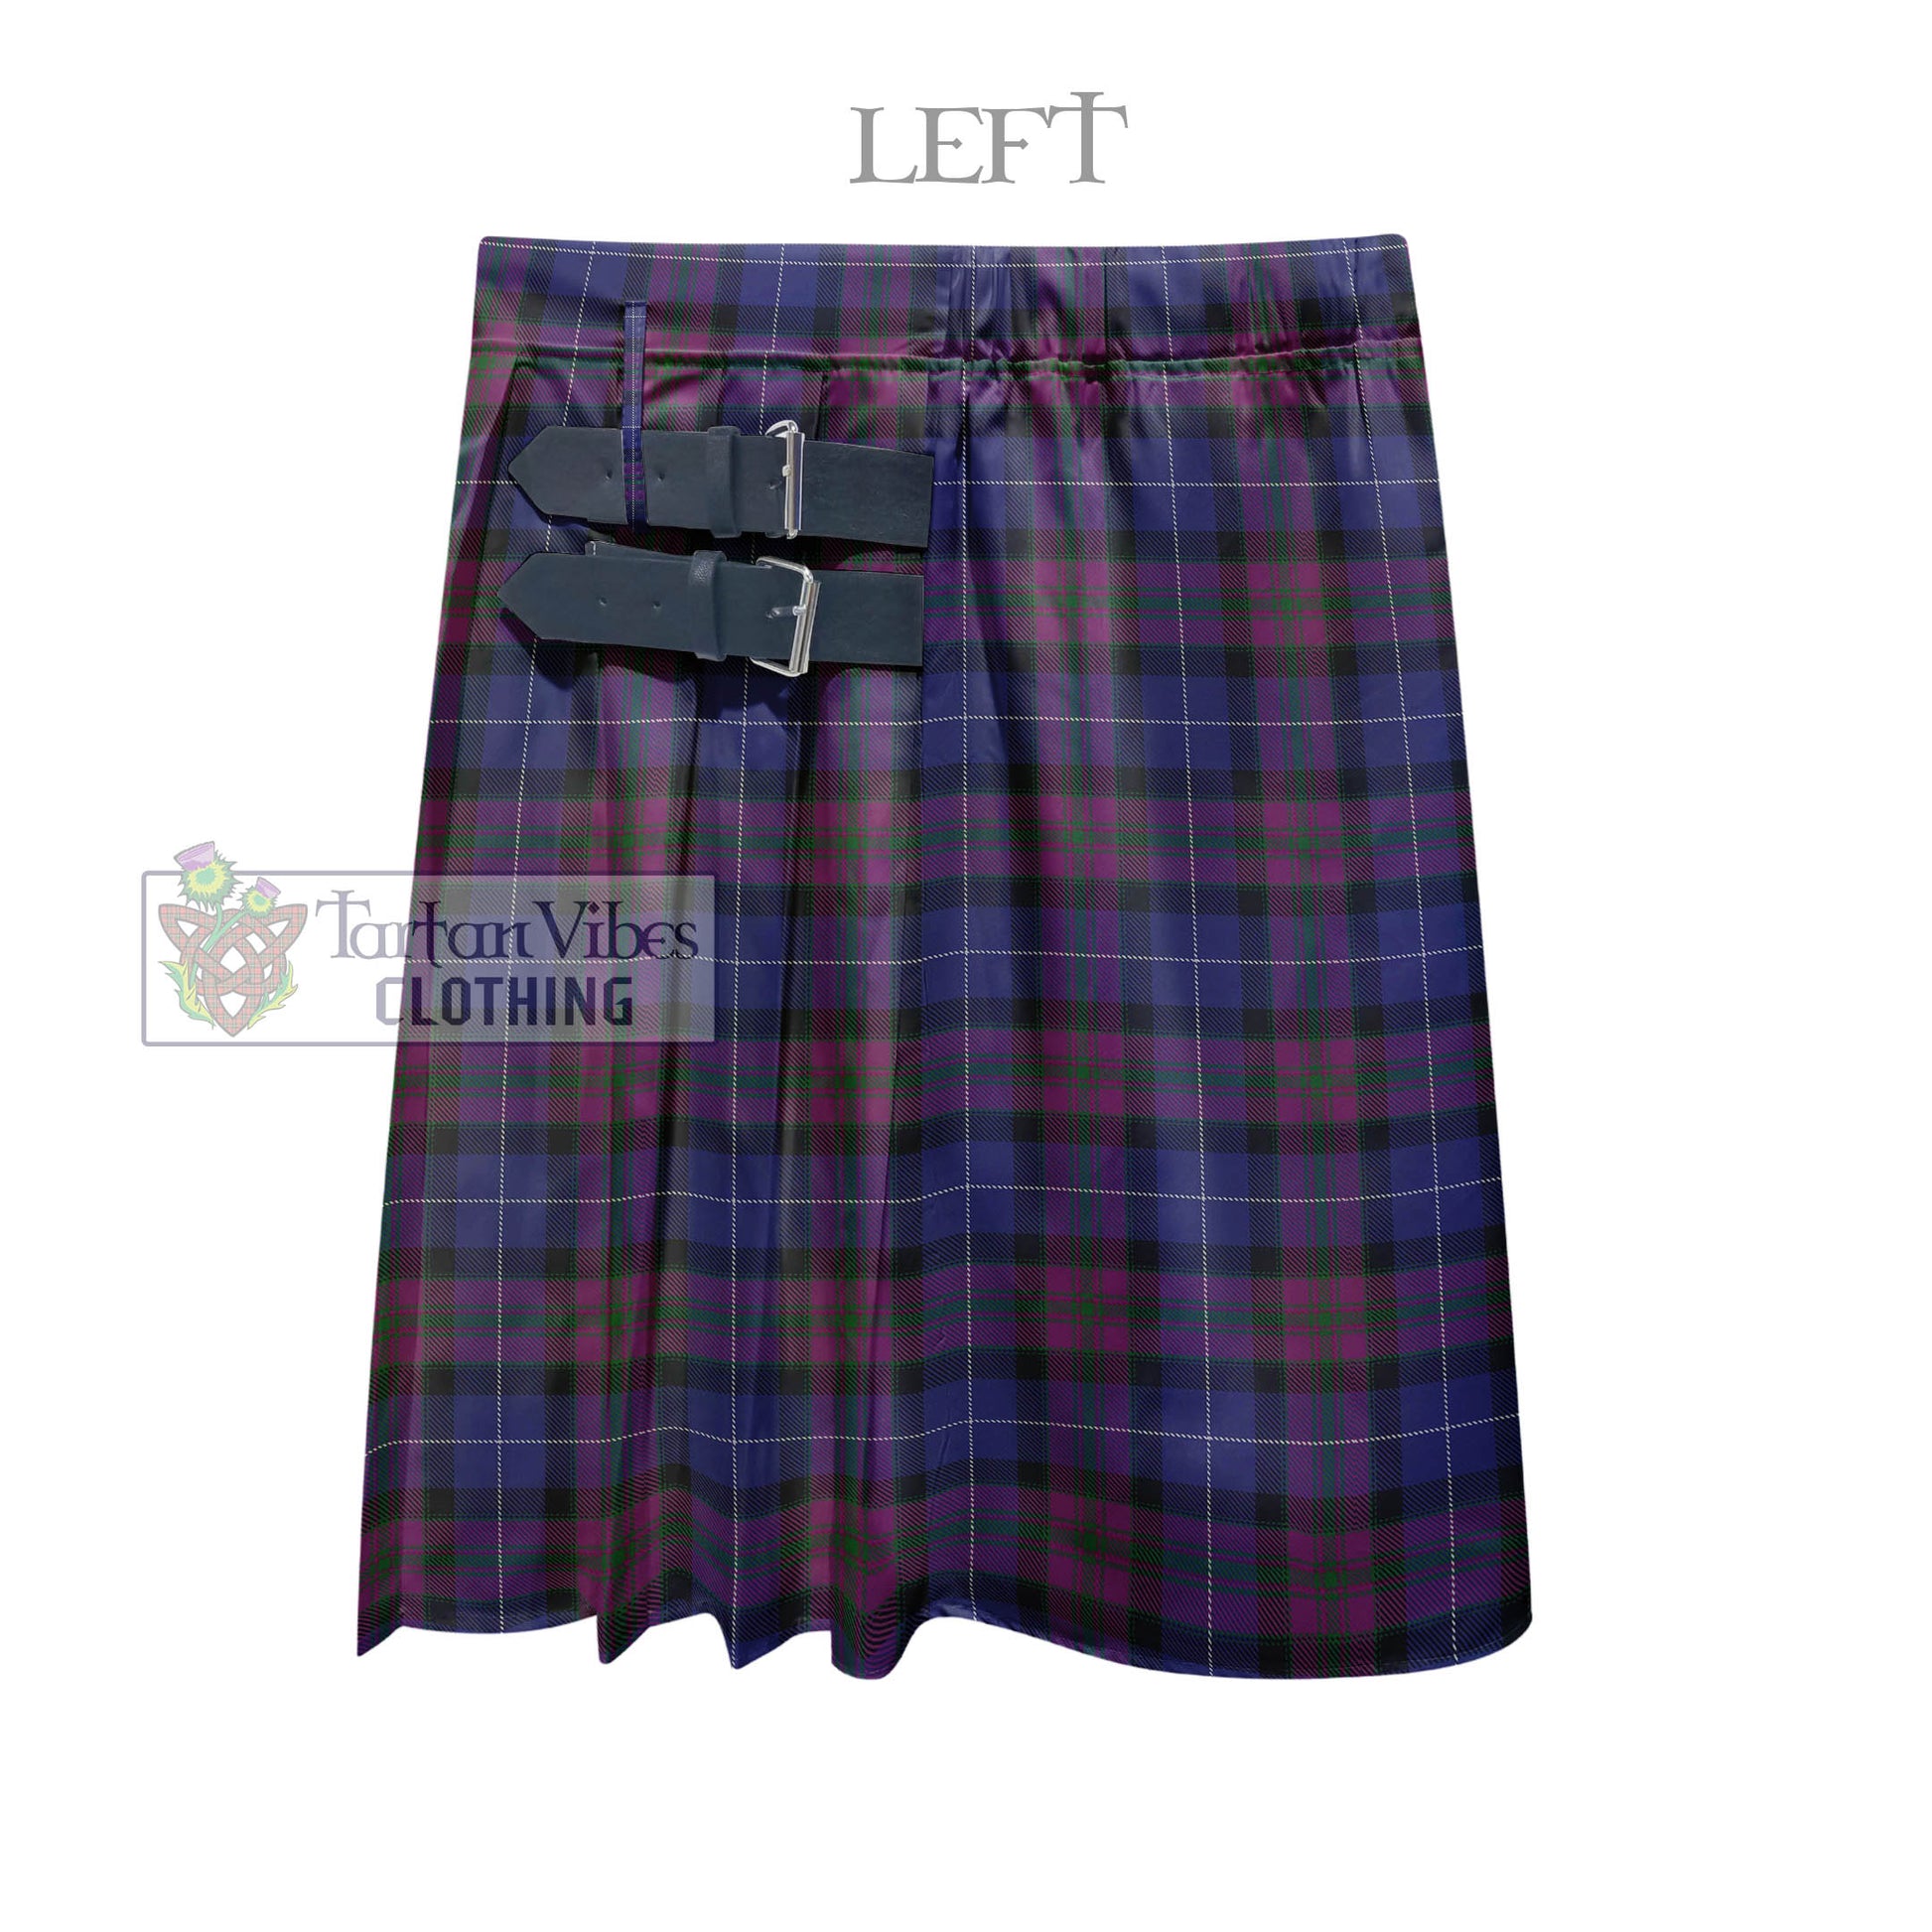 Tartan Vibes Clothing Pride of Scotland Tartan Men's Pleated Skirt - Fashion Casual Retro Scottish Style